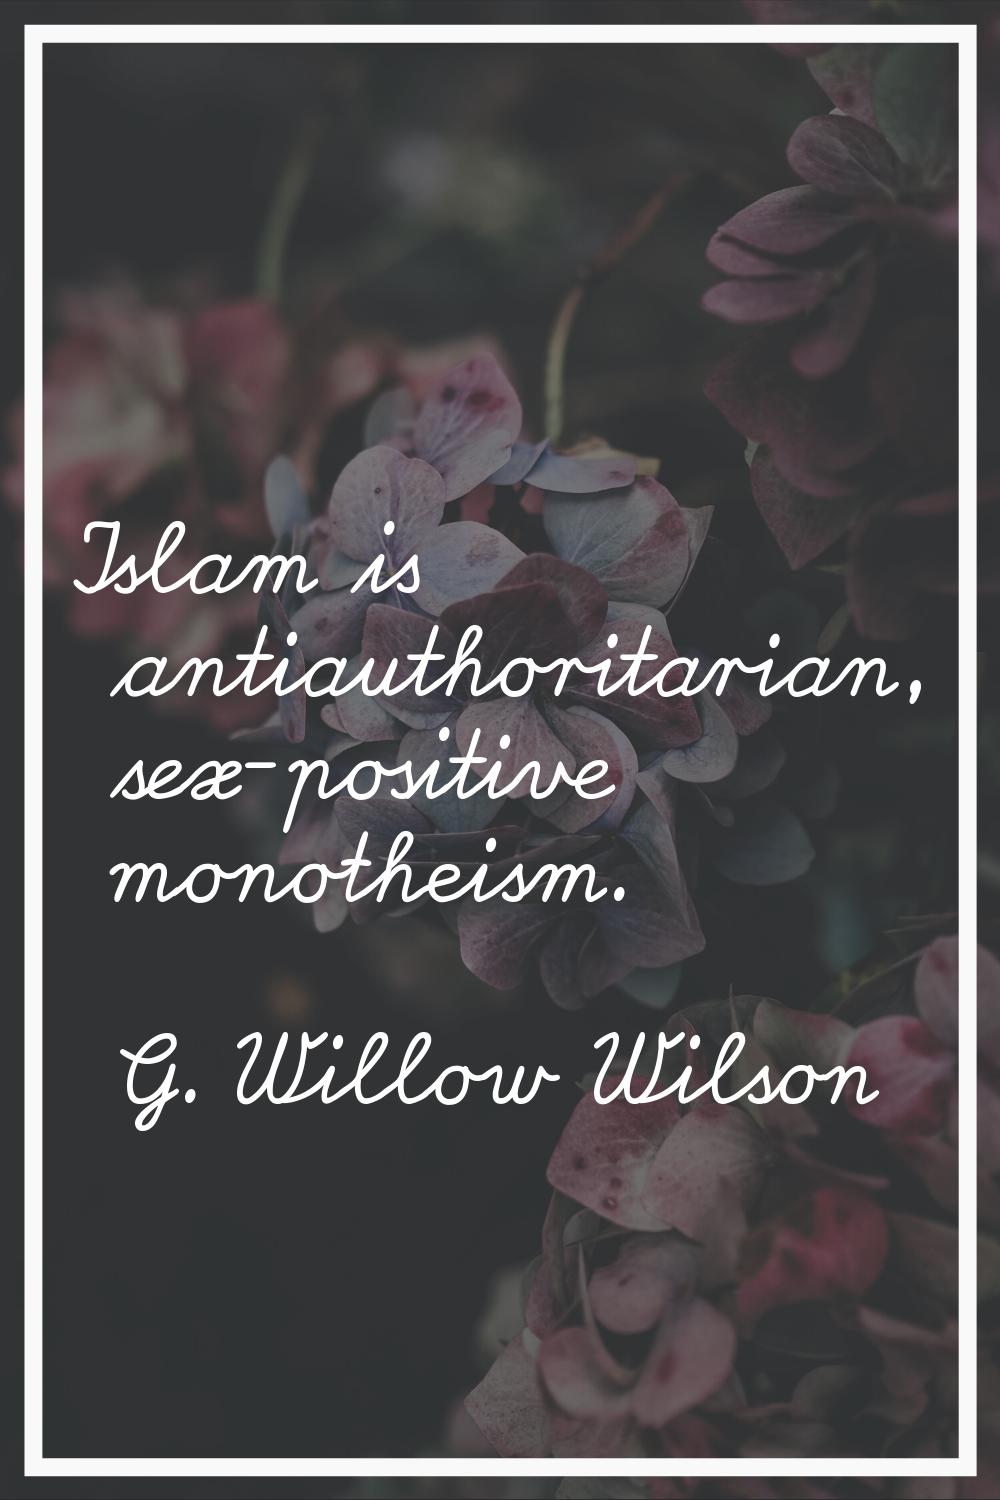 Islam is antiauthoritarian, sex-positive monotheism.